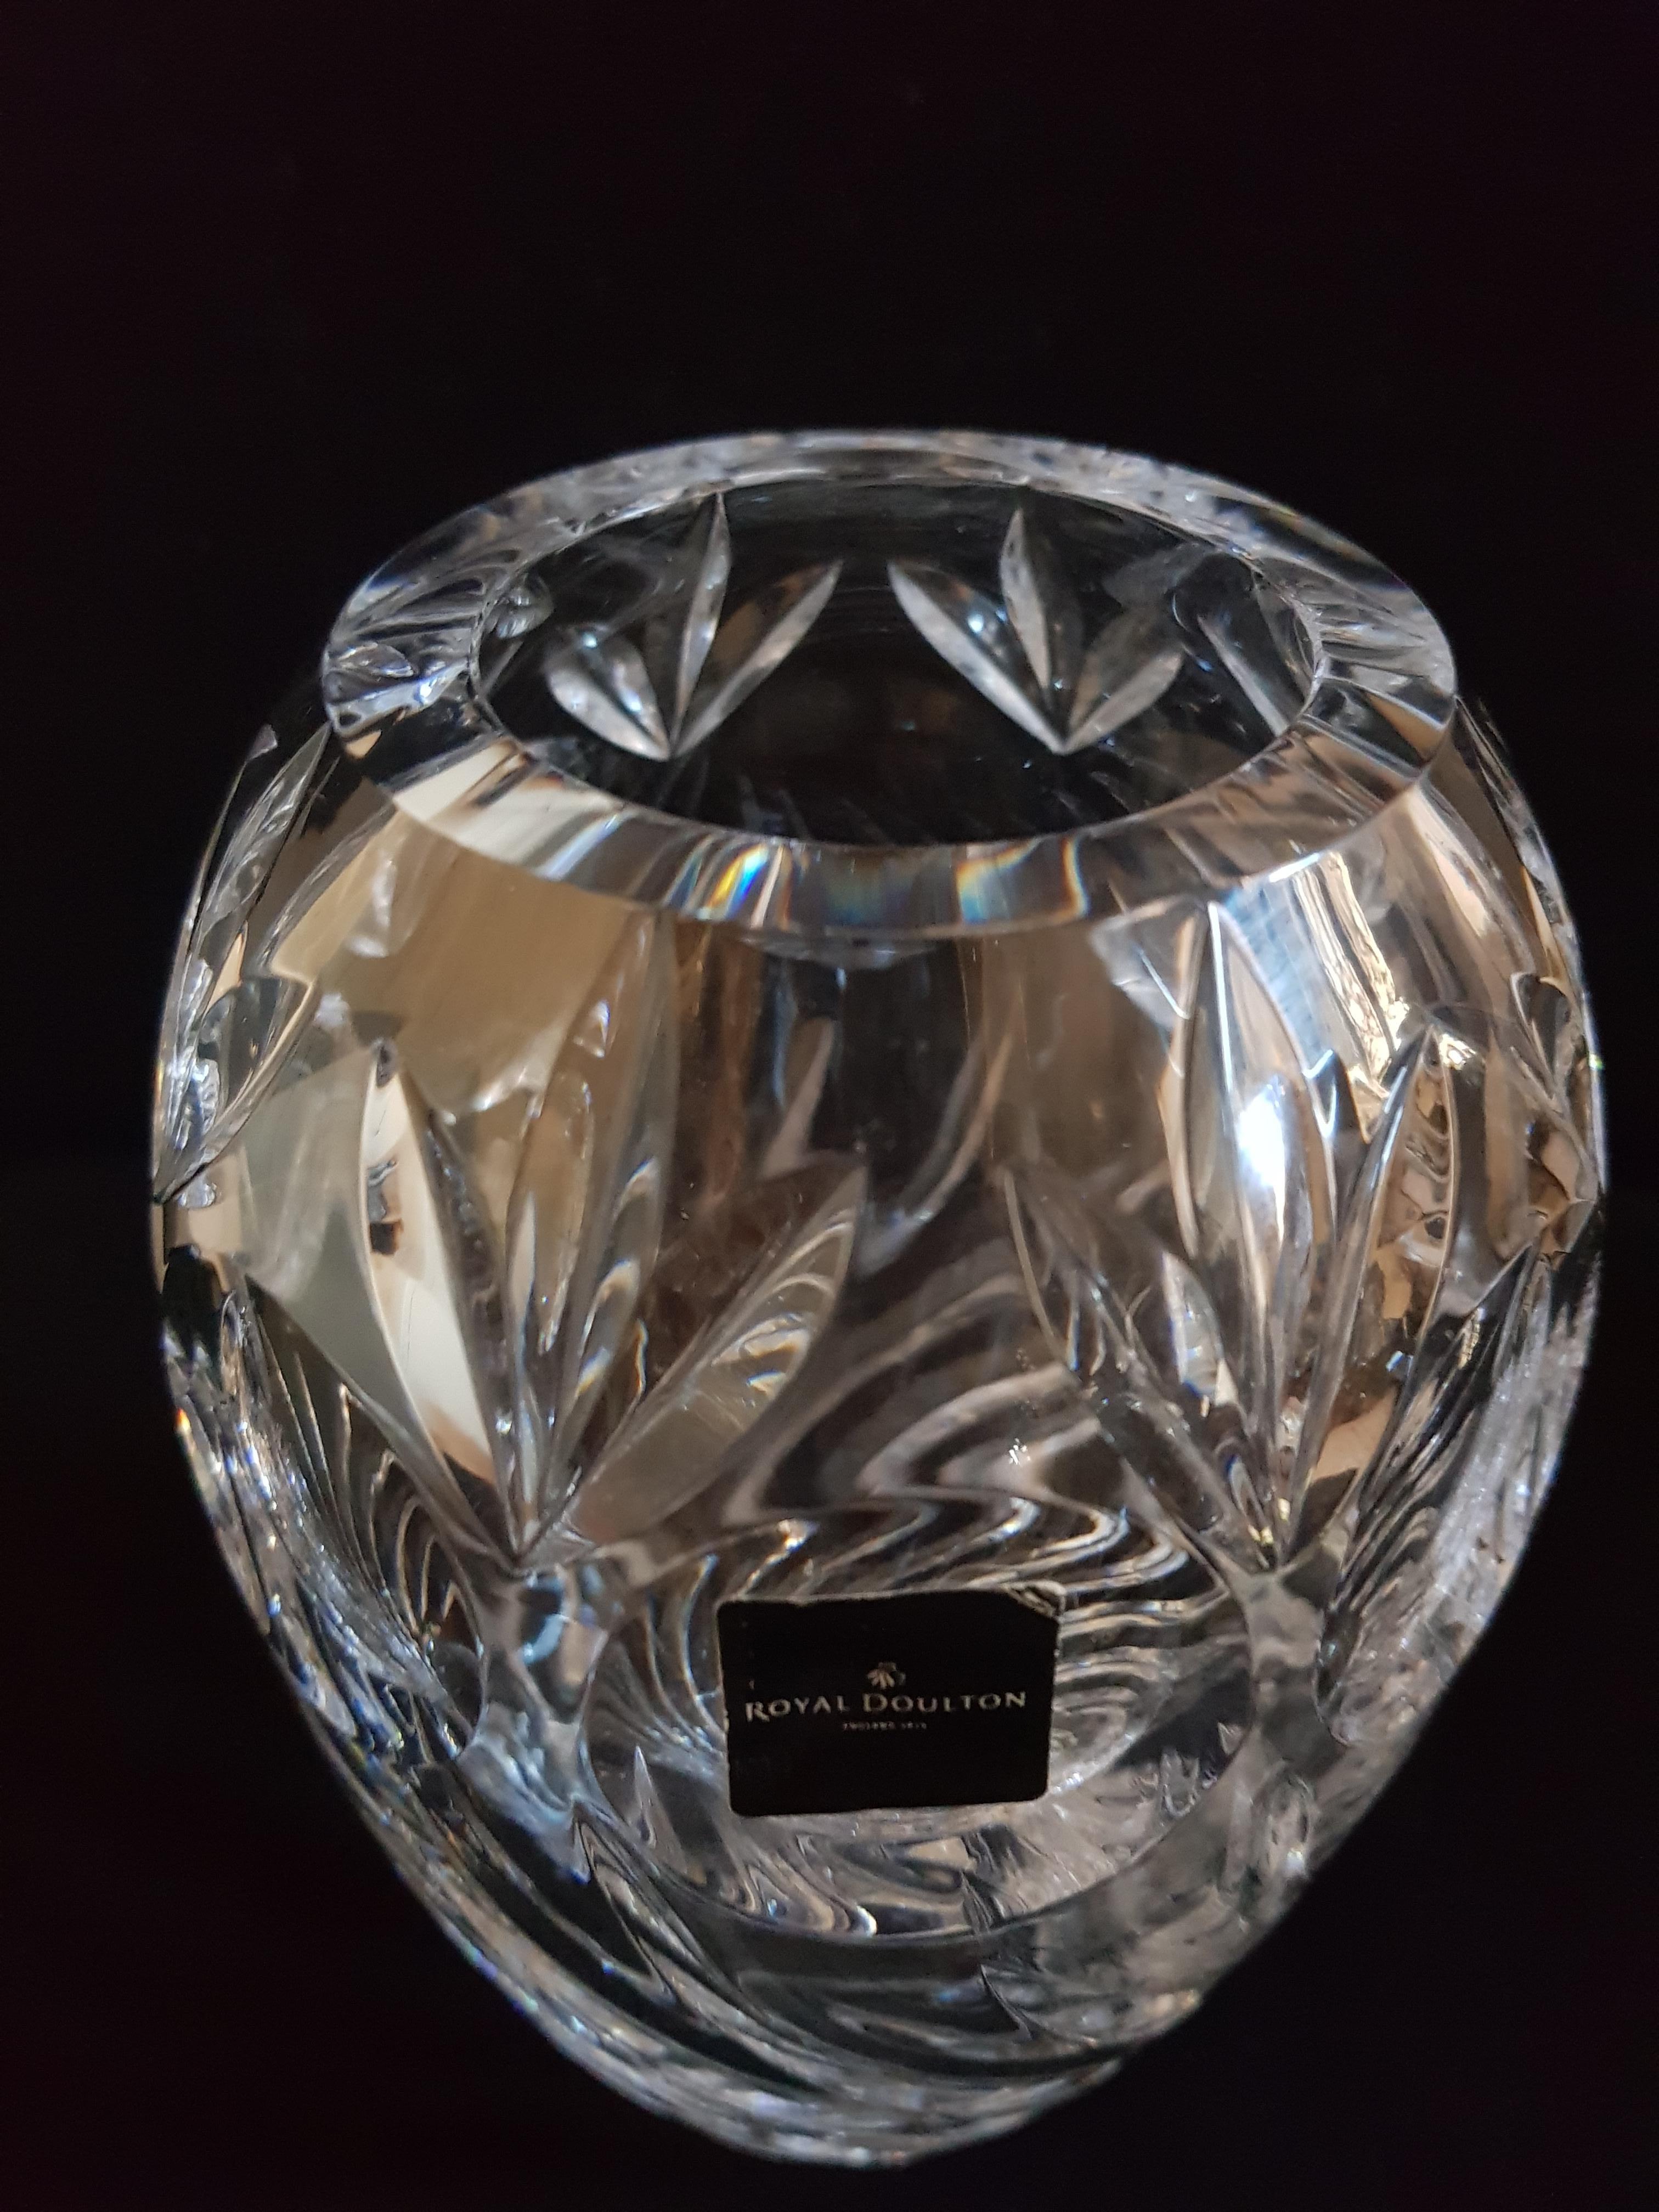 royal doulton crystal vases